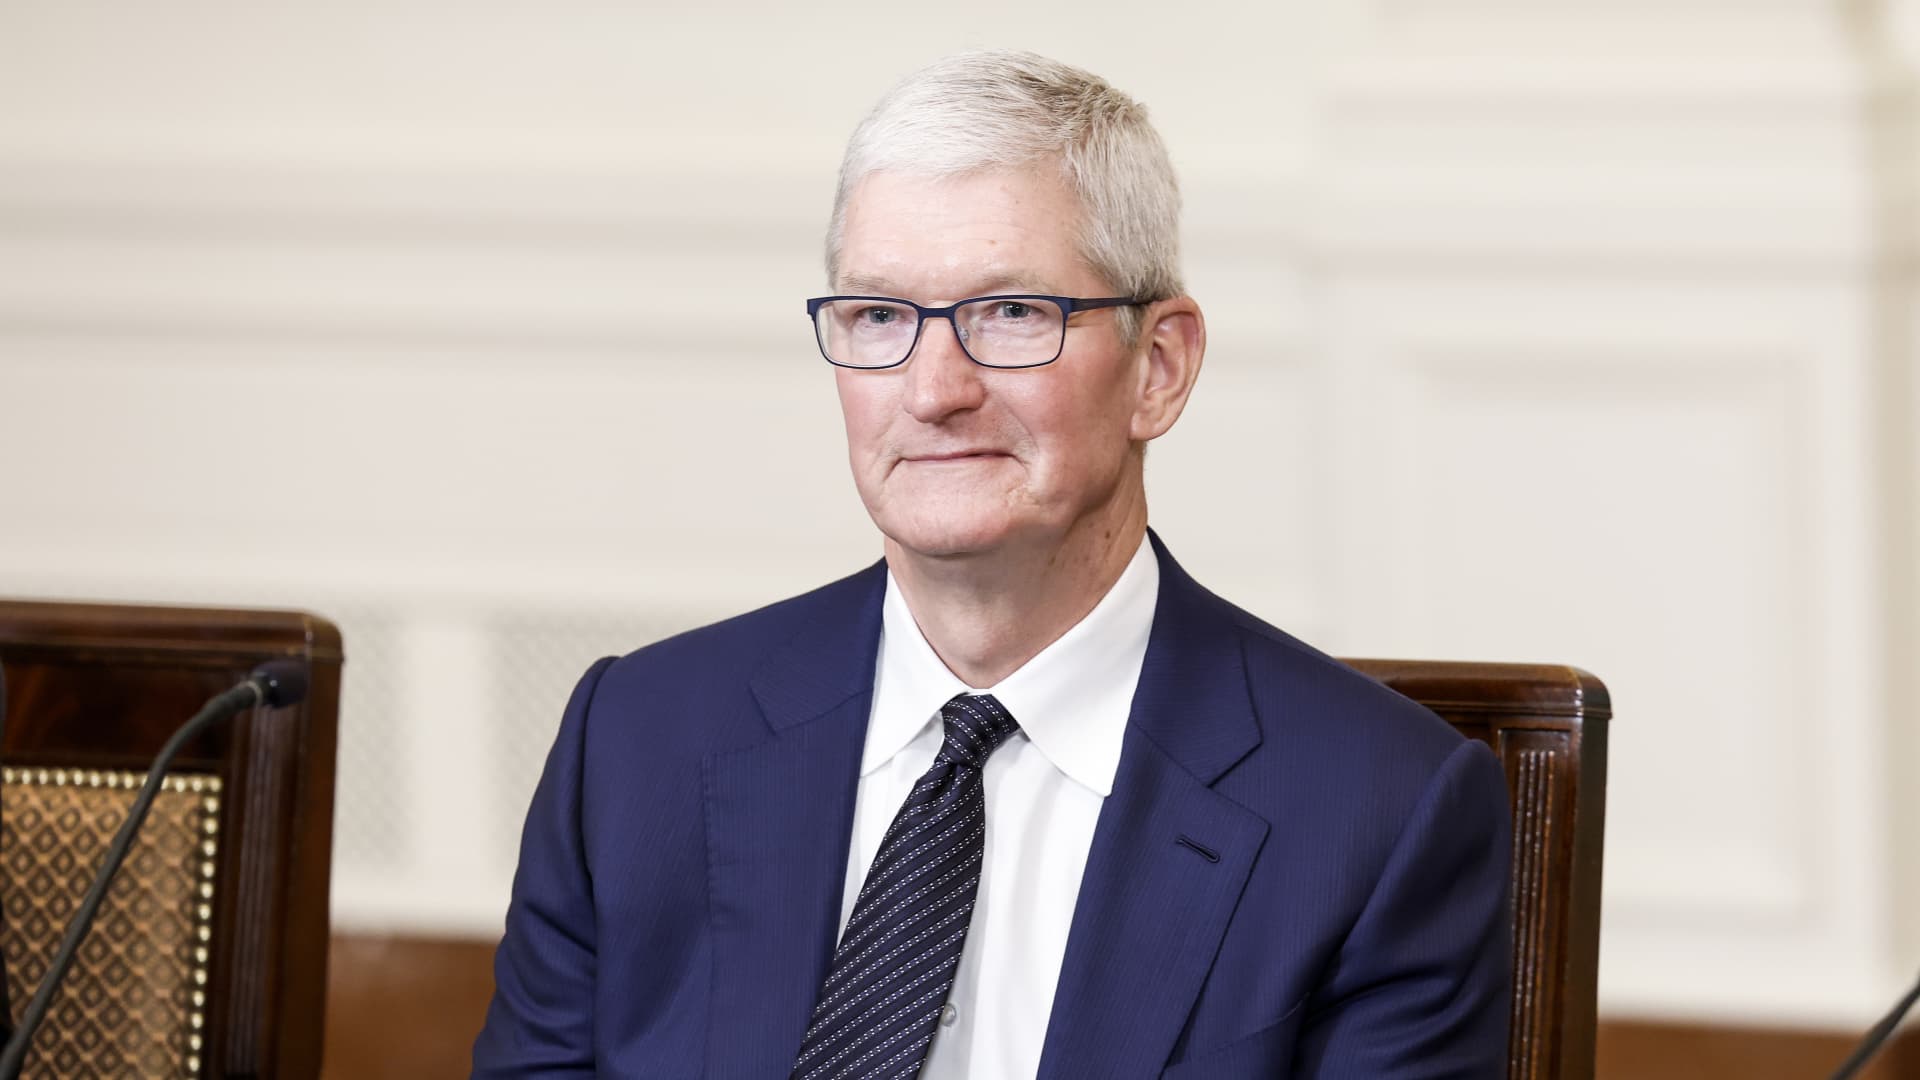 Apple will pay $25 million in DOJ discrimination settlement